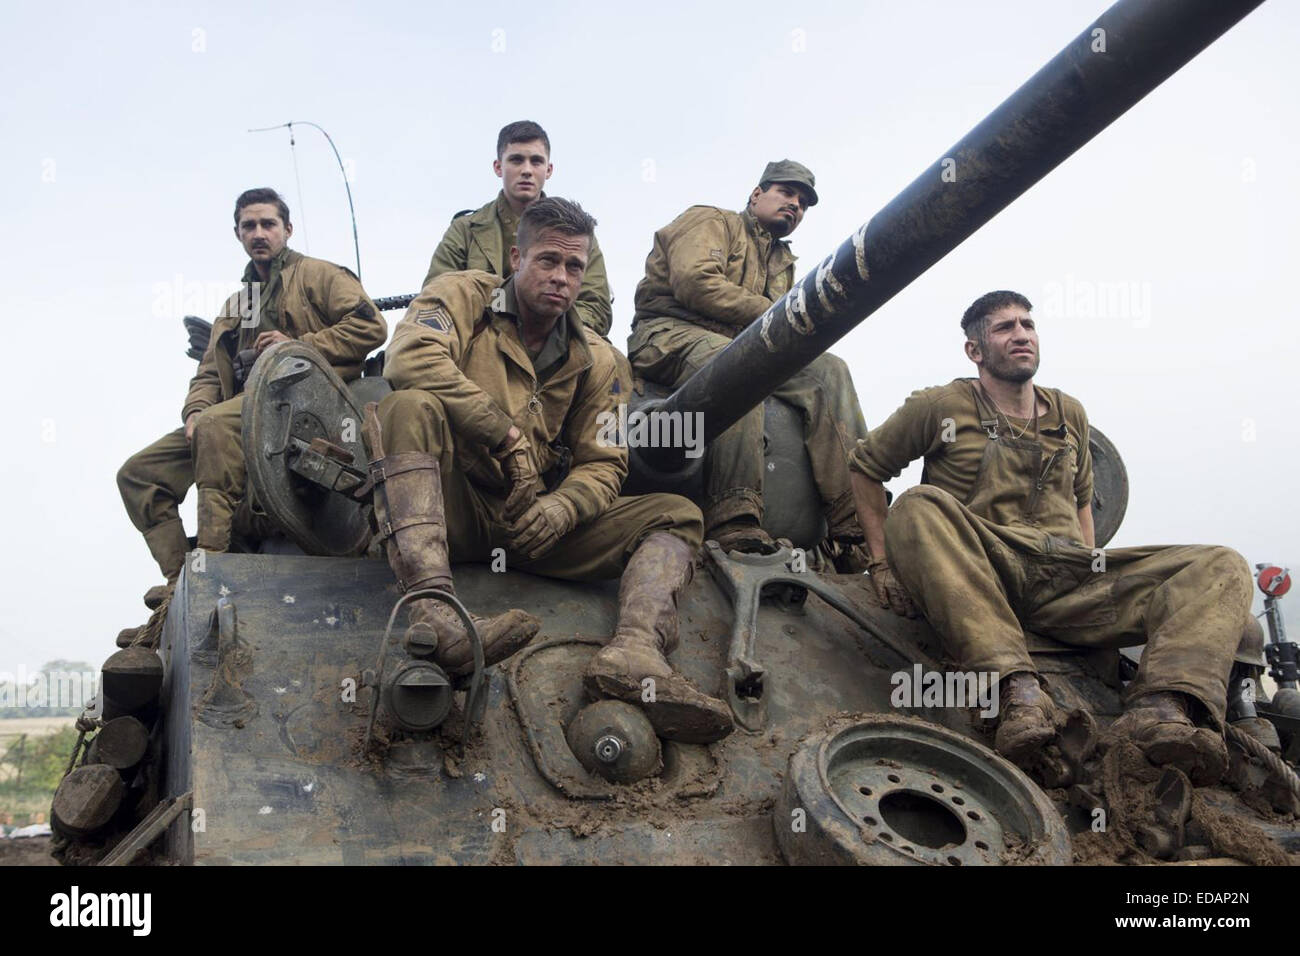 Fury is a 2014 American war film written and directed by David Ayer. The film stars Brad Pitt, Logan Lerman, Shia LaBeouf, Michael Peña, and Jon Bernthal. The film portrays tank crews during the final days of World War II in Europe Stock Photo